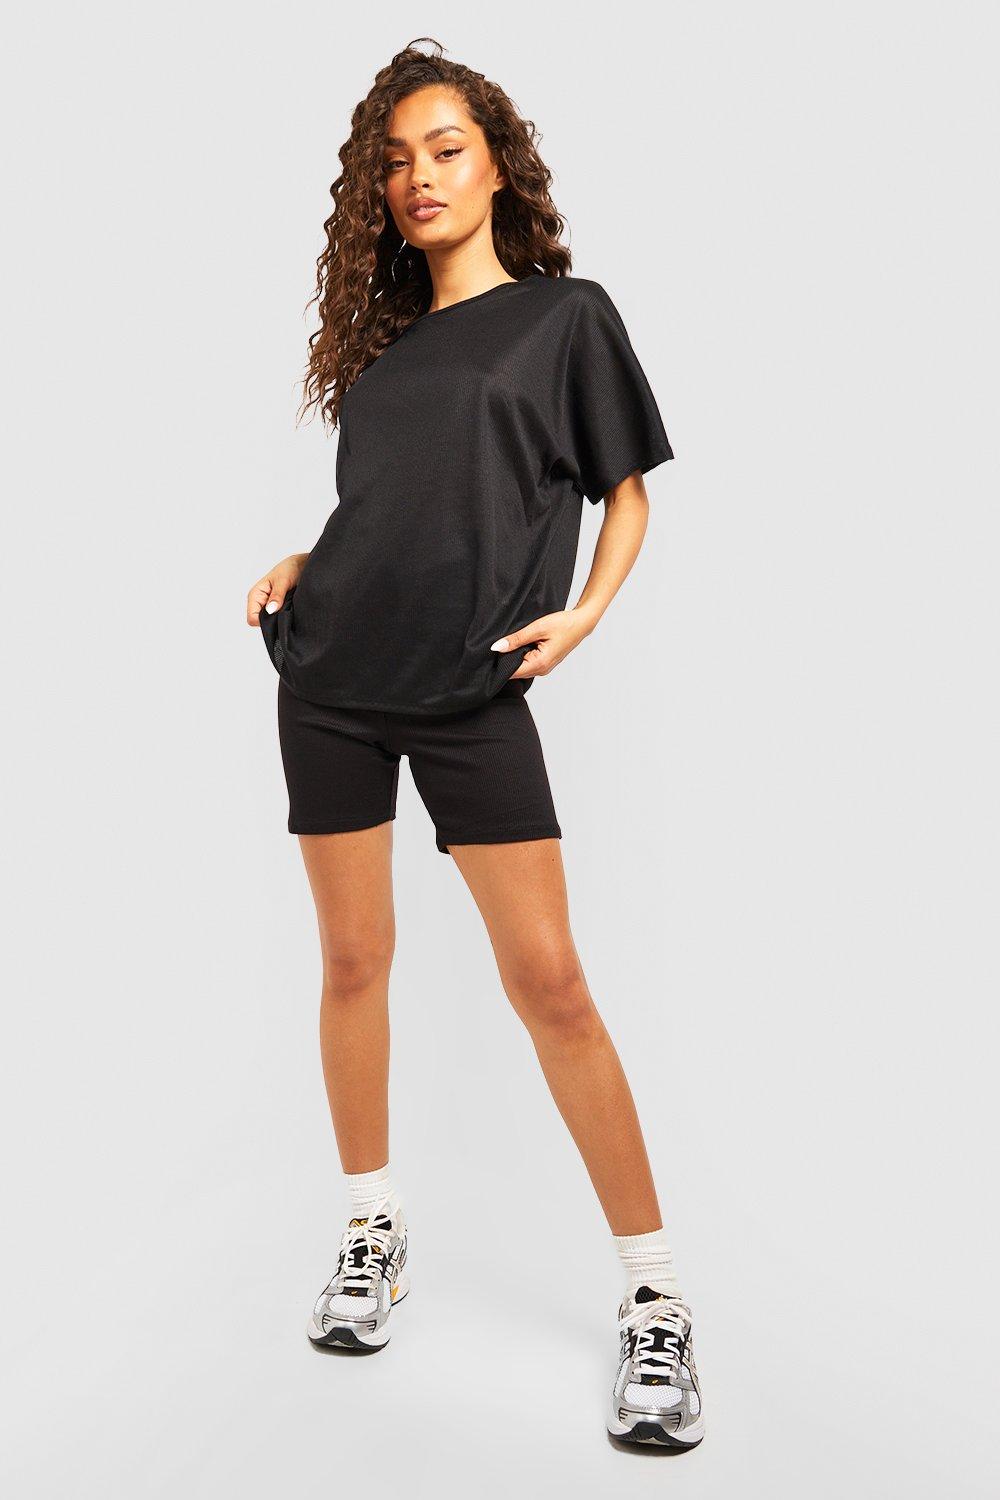 Hype Black Oversized T-Shirt and Cycle Shorts Women's Set